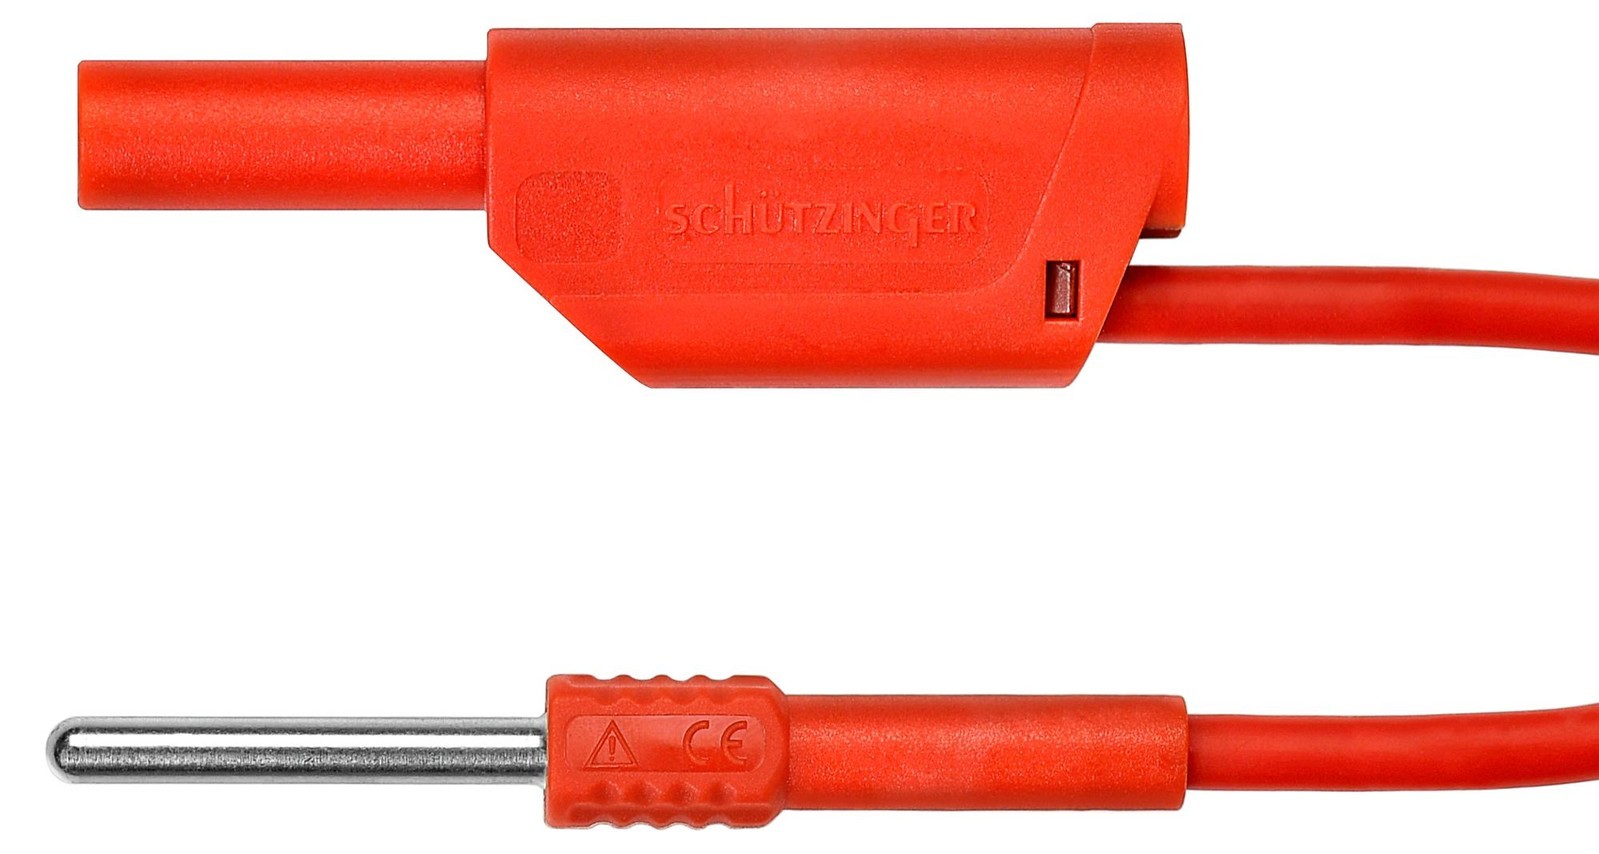 Schutzinger Al 8323 / 1 / 50 / Rt Test Lead, 4mm Plug-Pin Tip Plug, 500mm